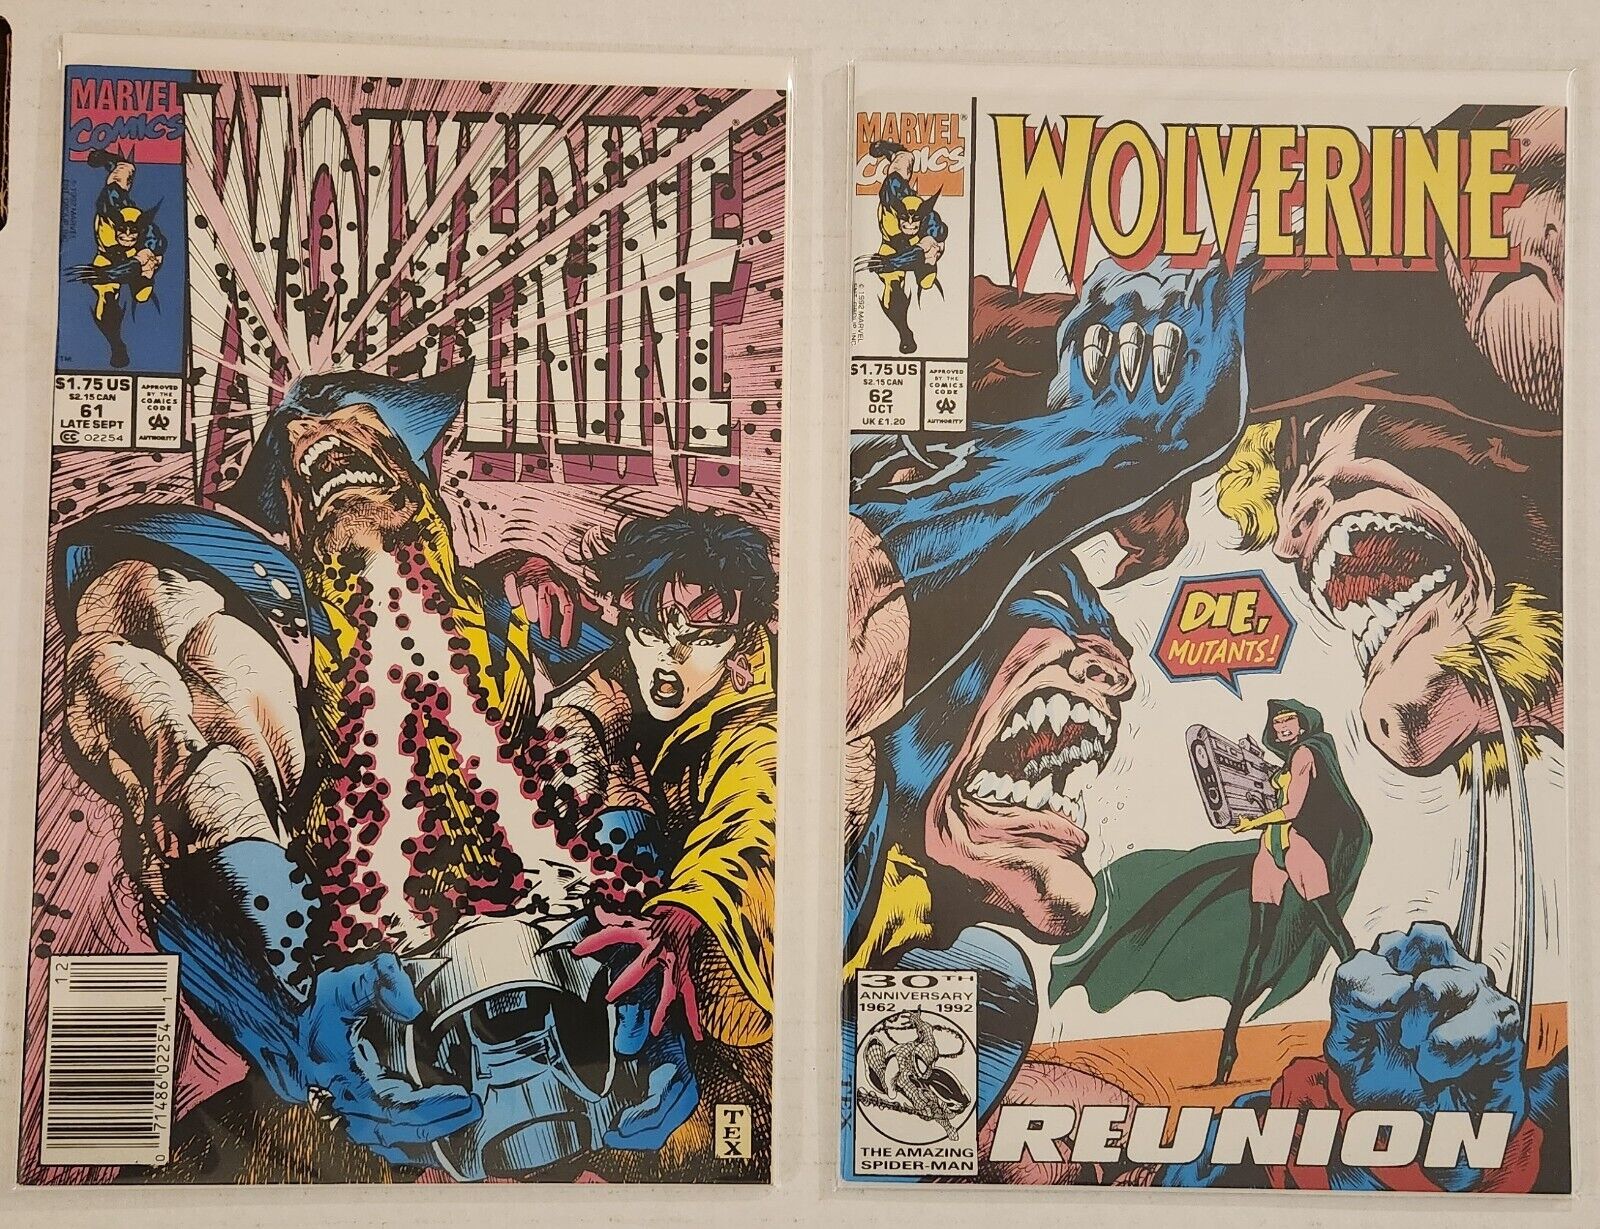 Wolverine (vol. 2) #61-70 (Marvel Comics 1992-1993) 10 issue run